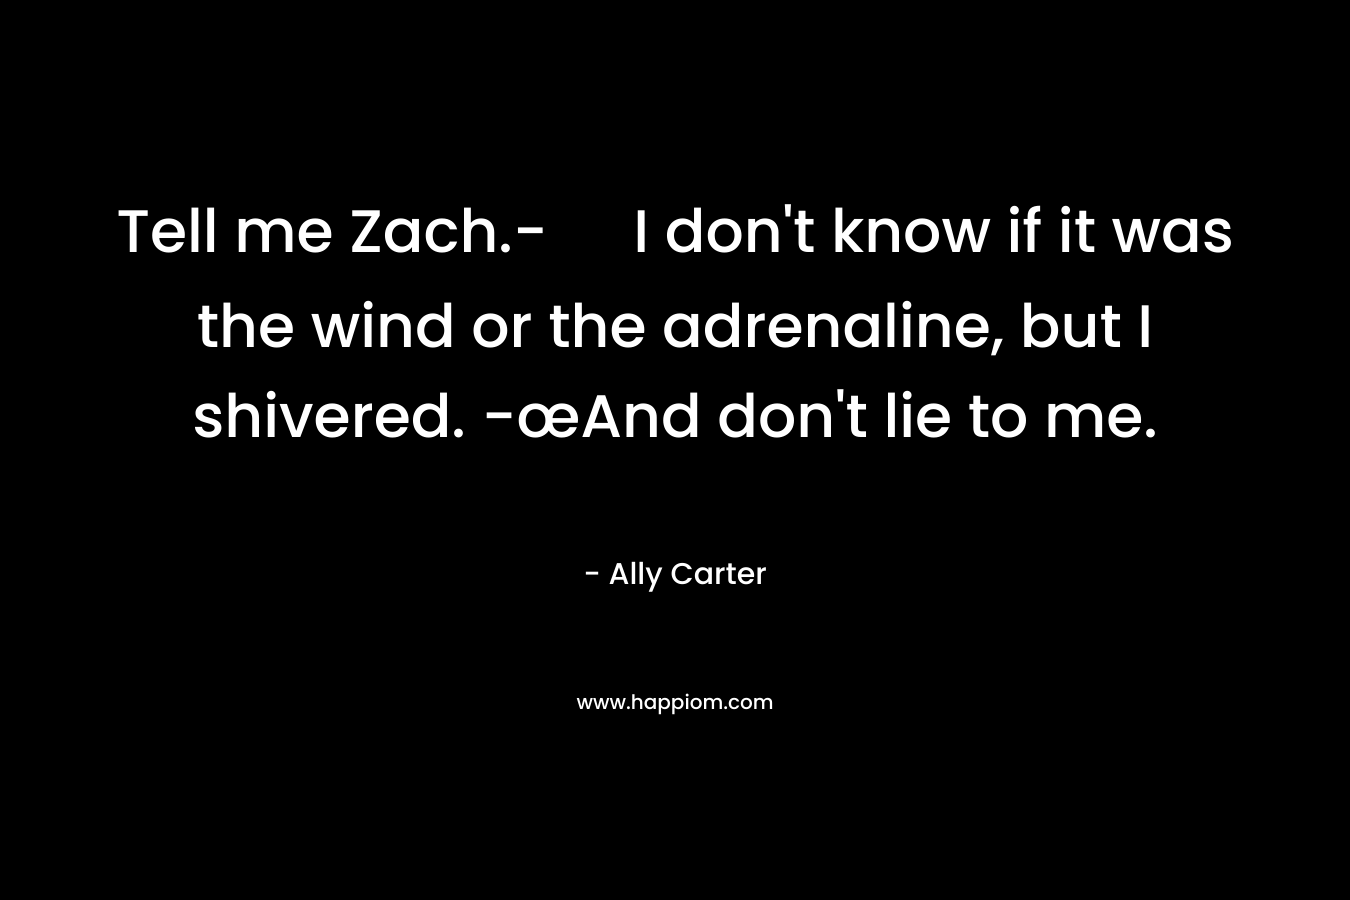 Tell me Zach.- I don't know if it was the wind or the adrenaline, but I shivered. -œAnd don't lie to me.